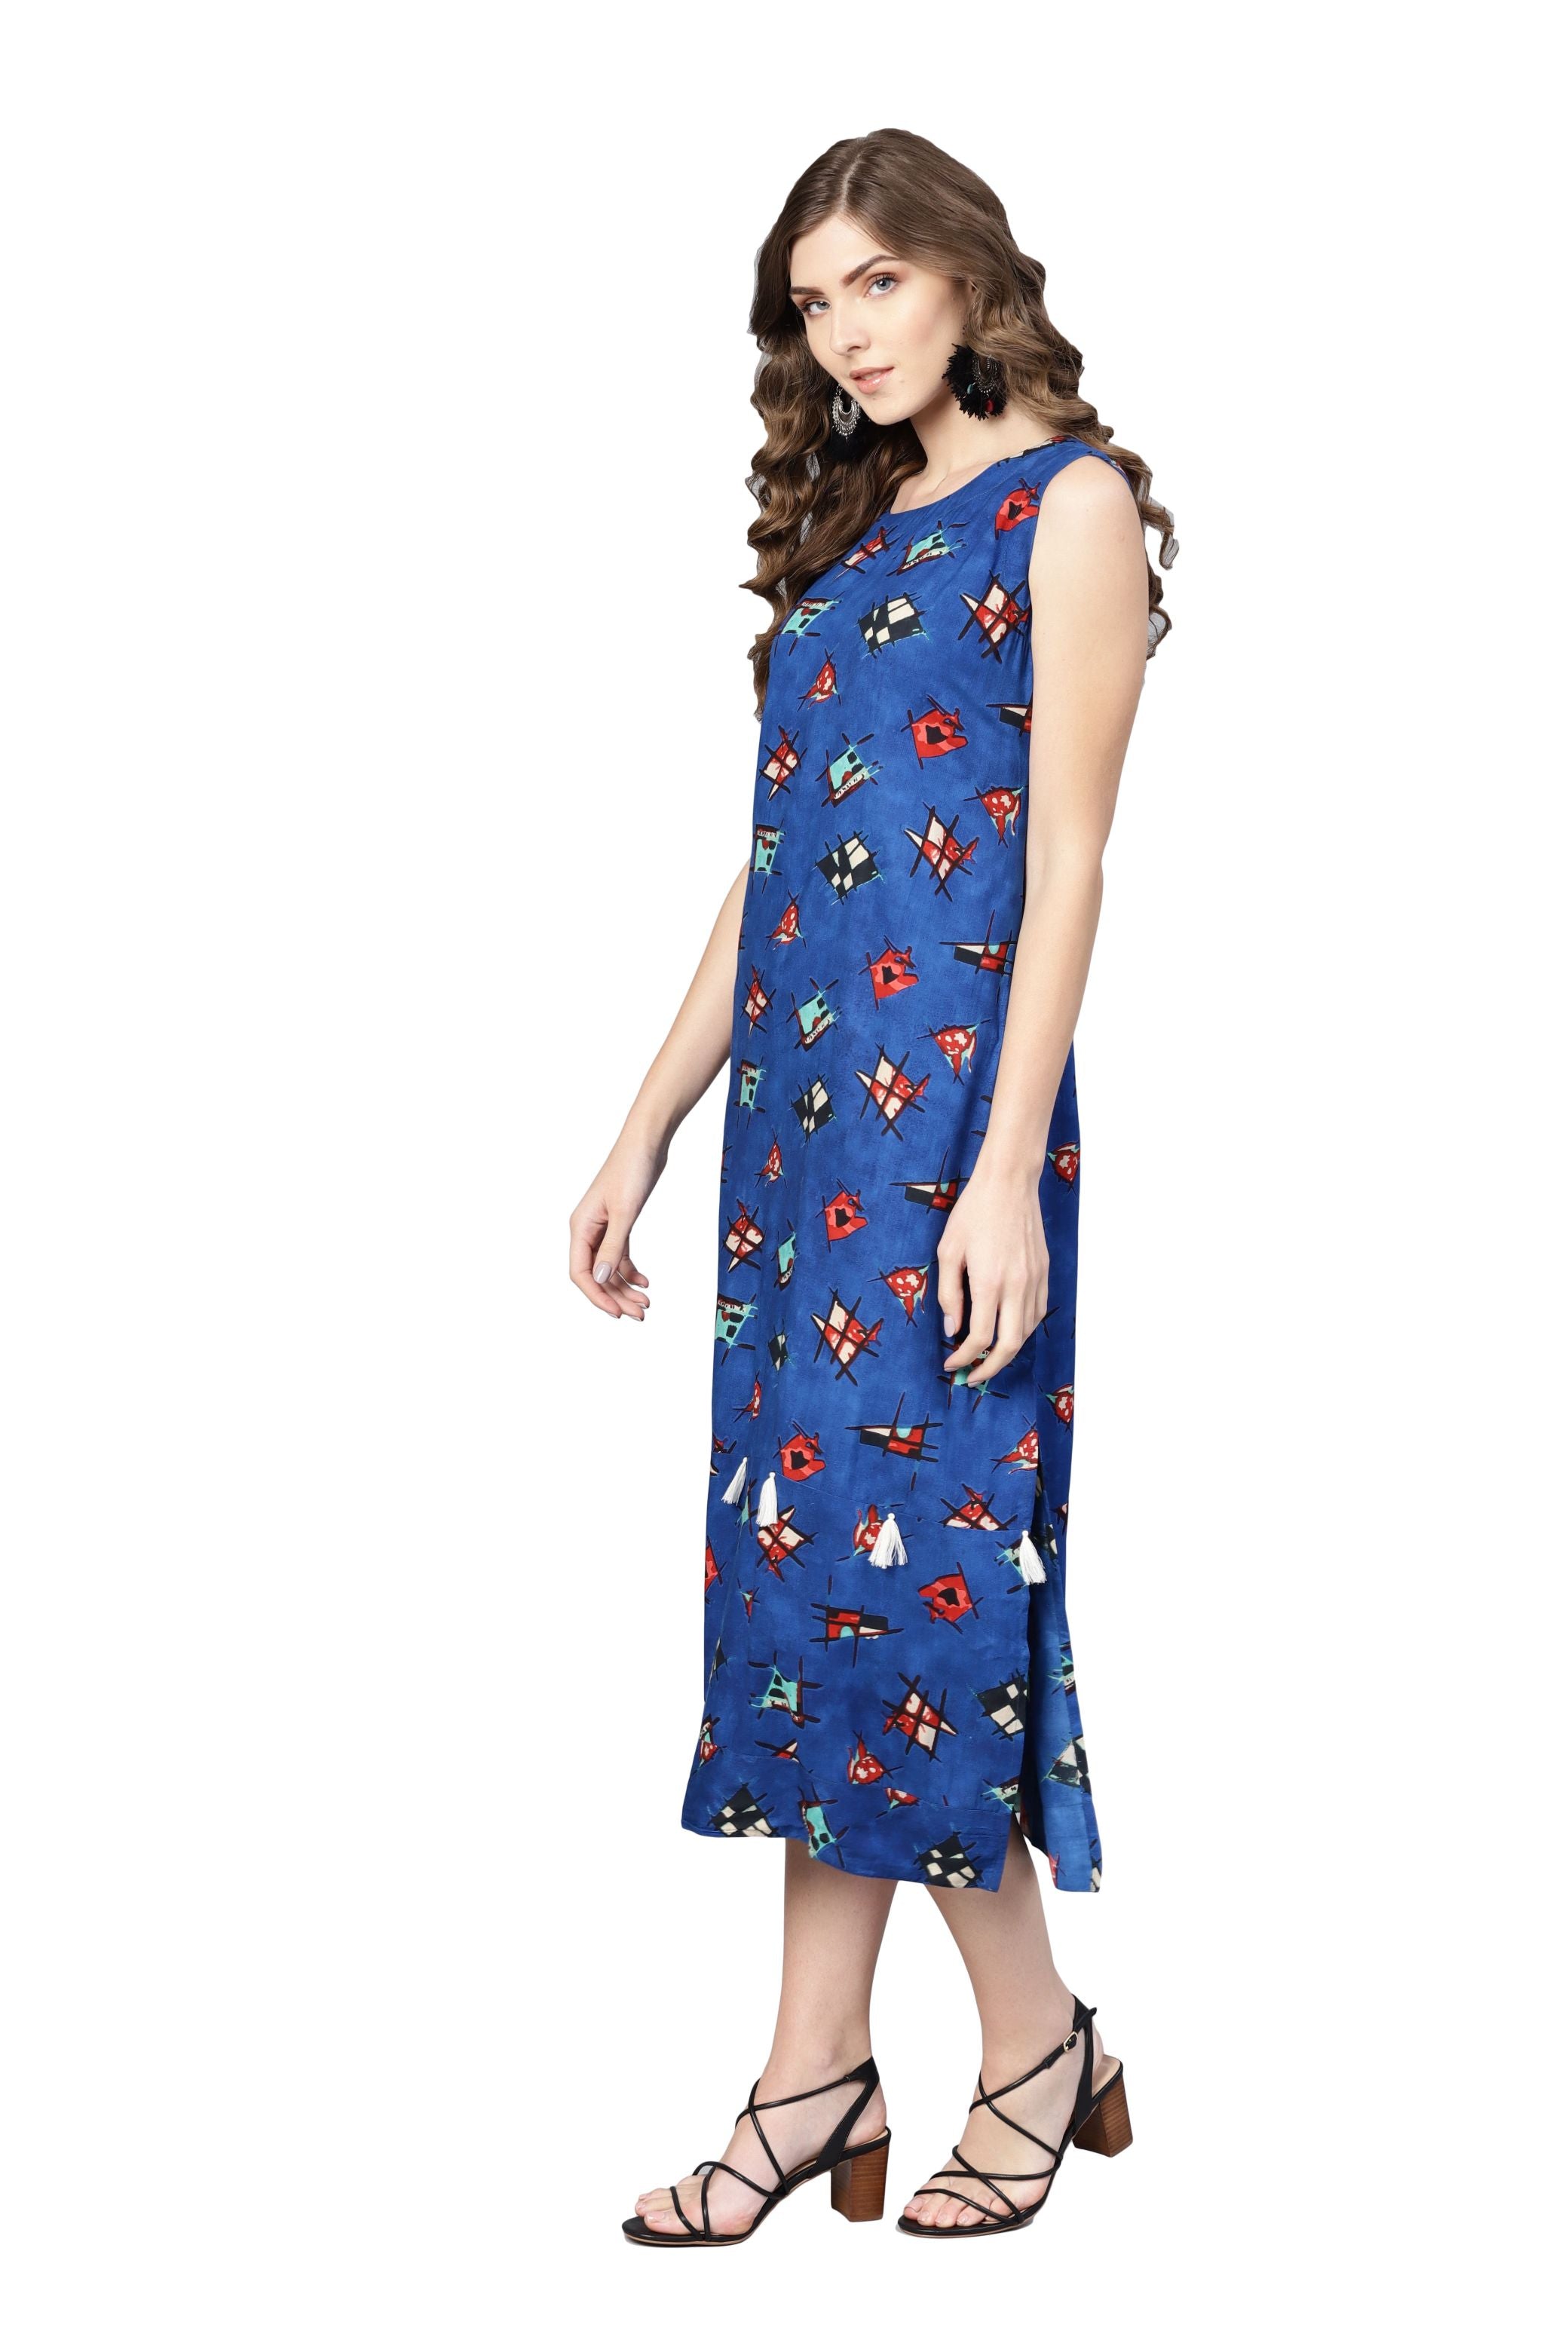 Women's Blue Rayon Printed Sleveeless Round Neck Dress - Myshka